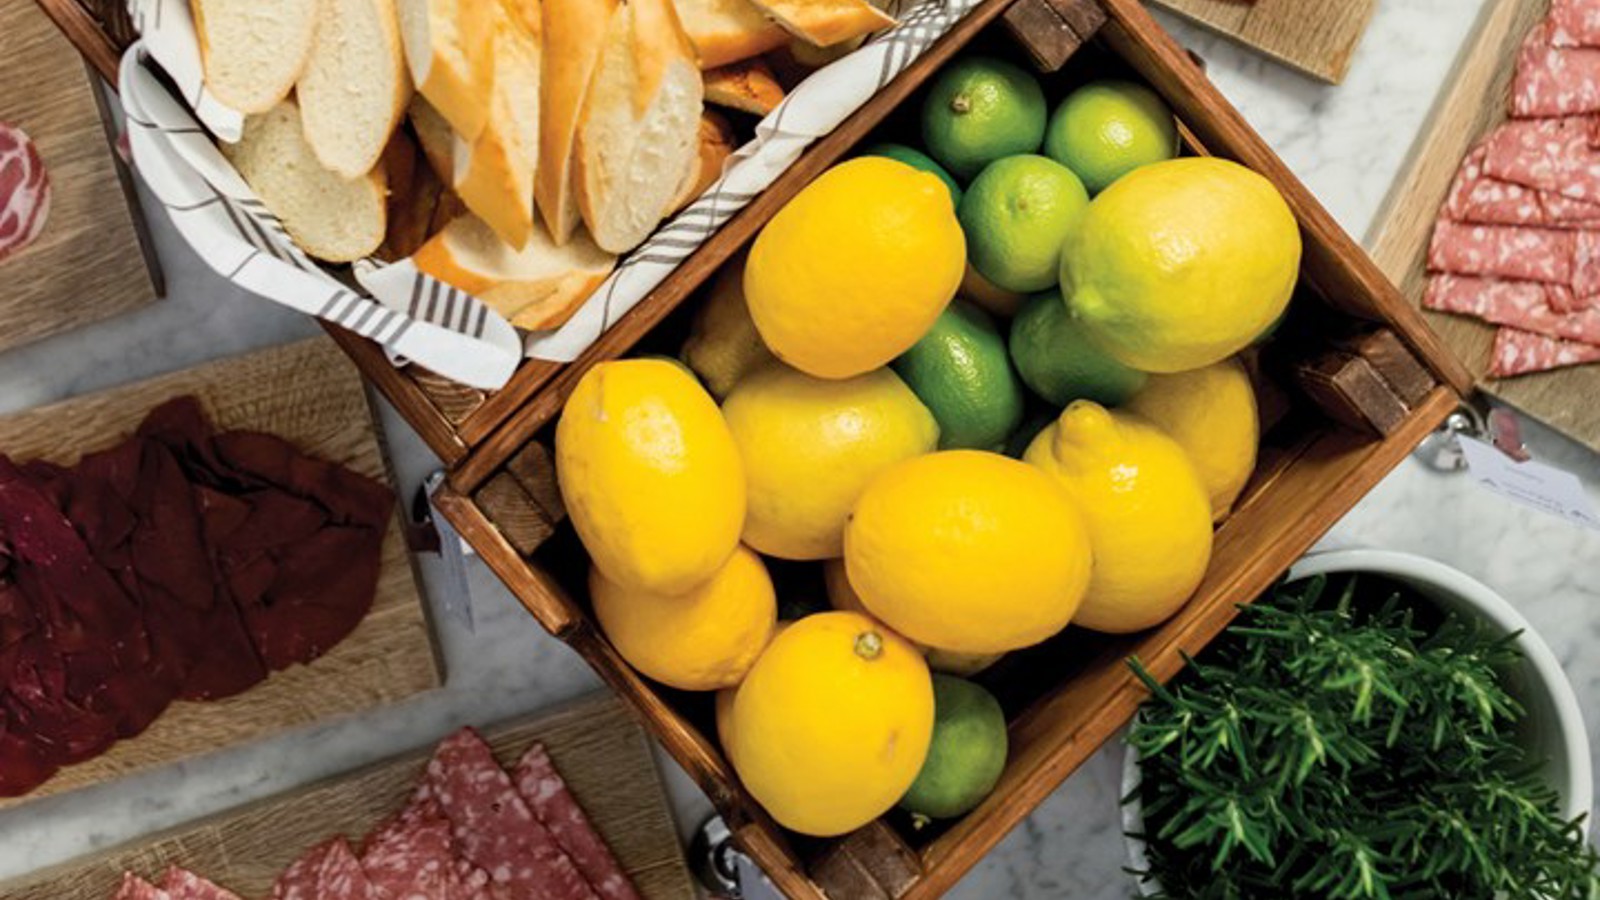 Image of lemons, limes and bread